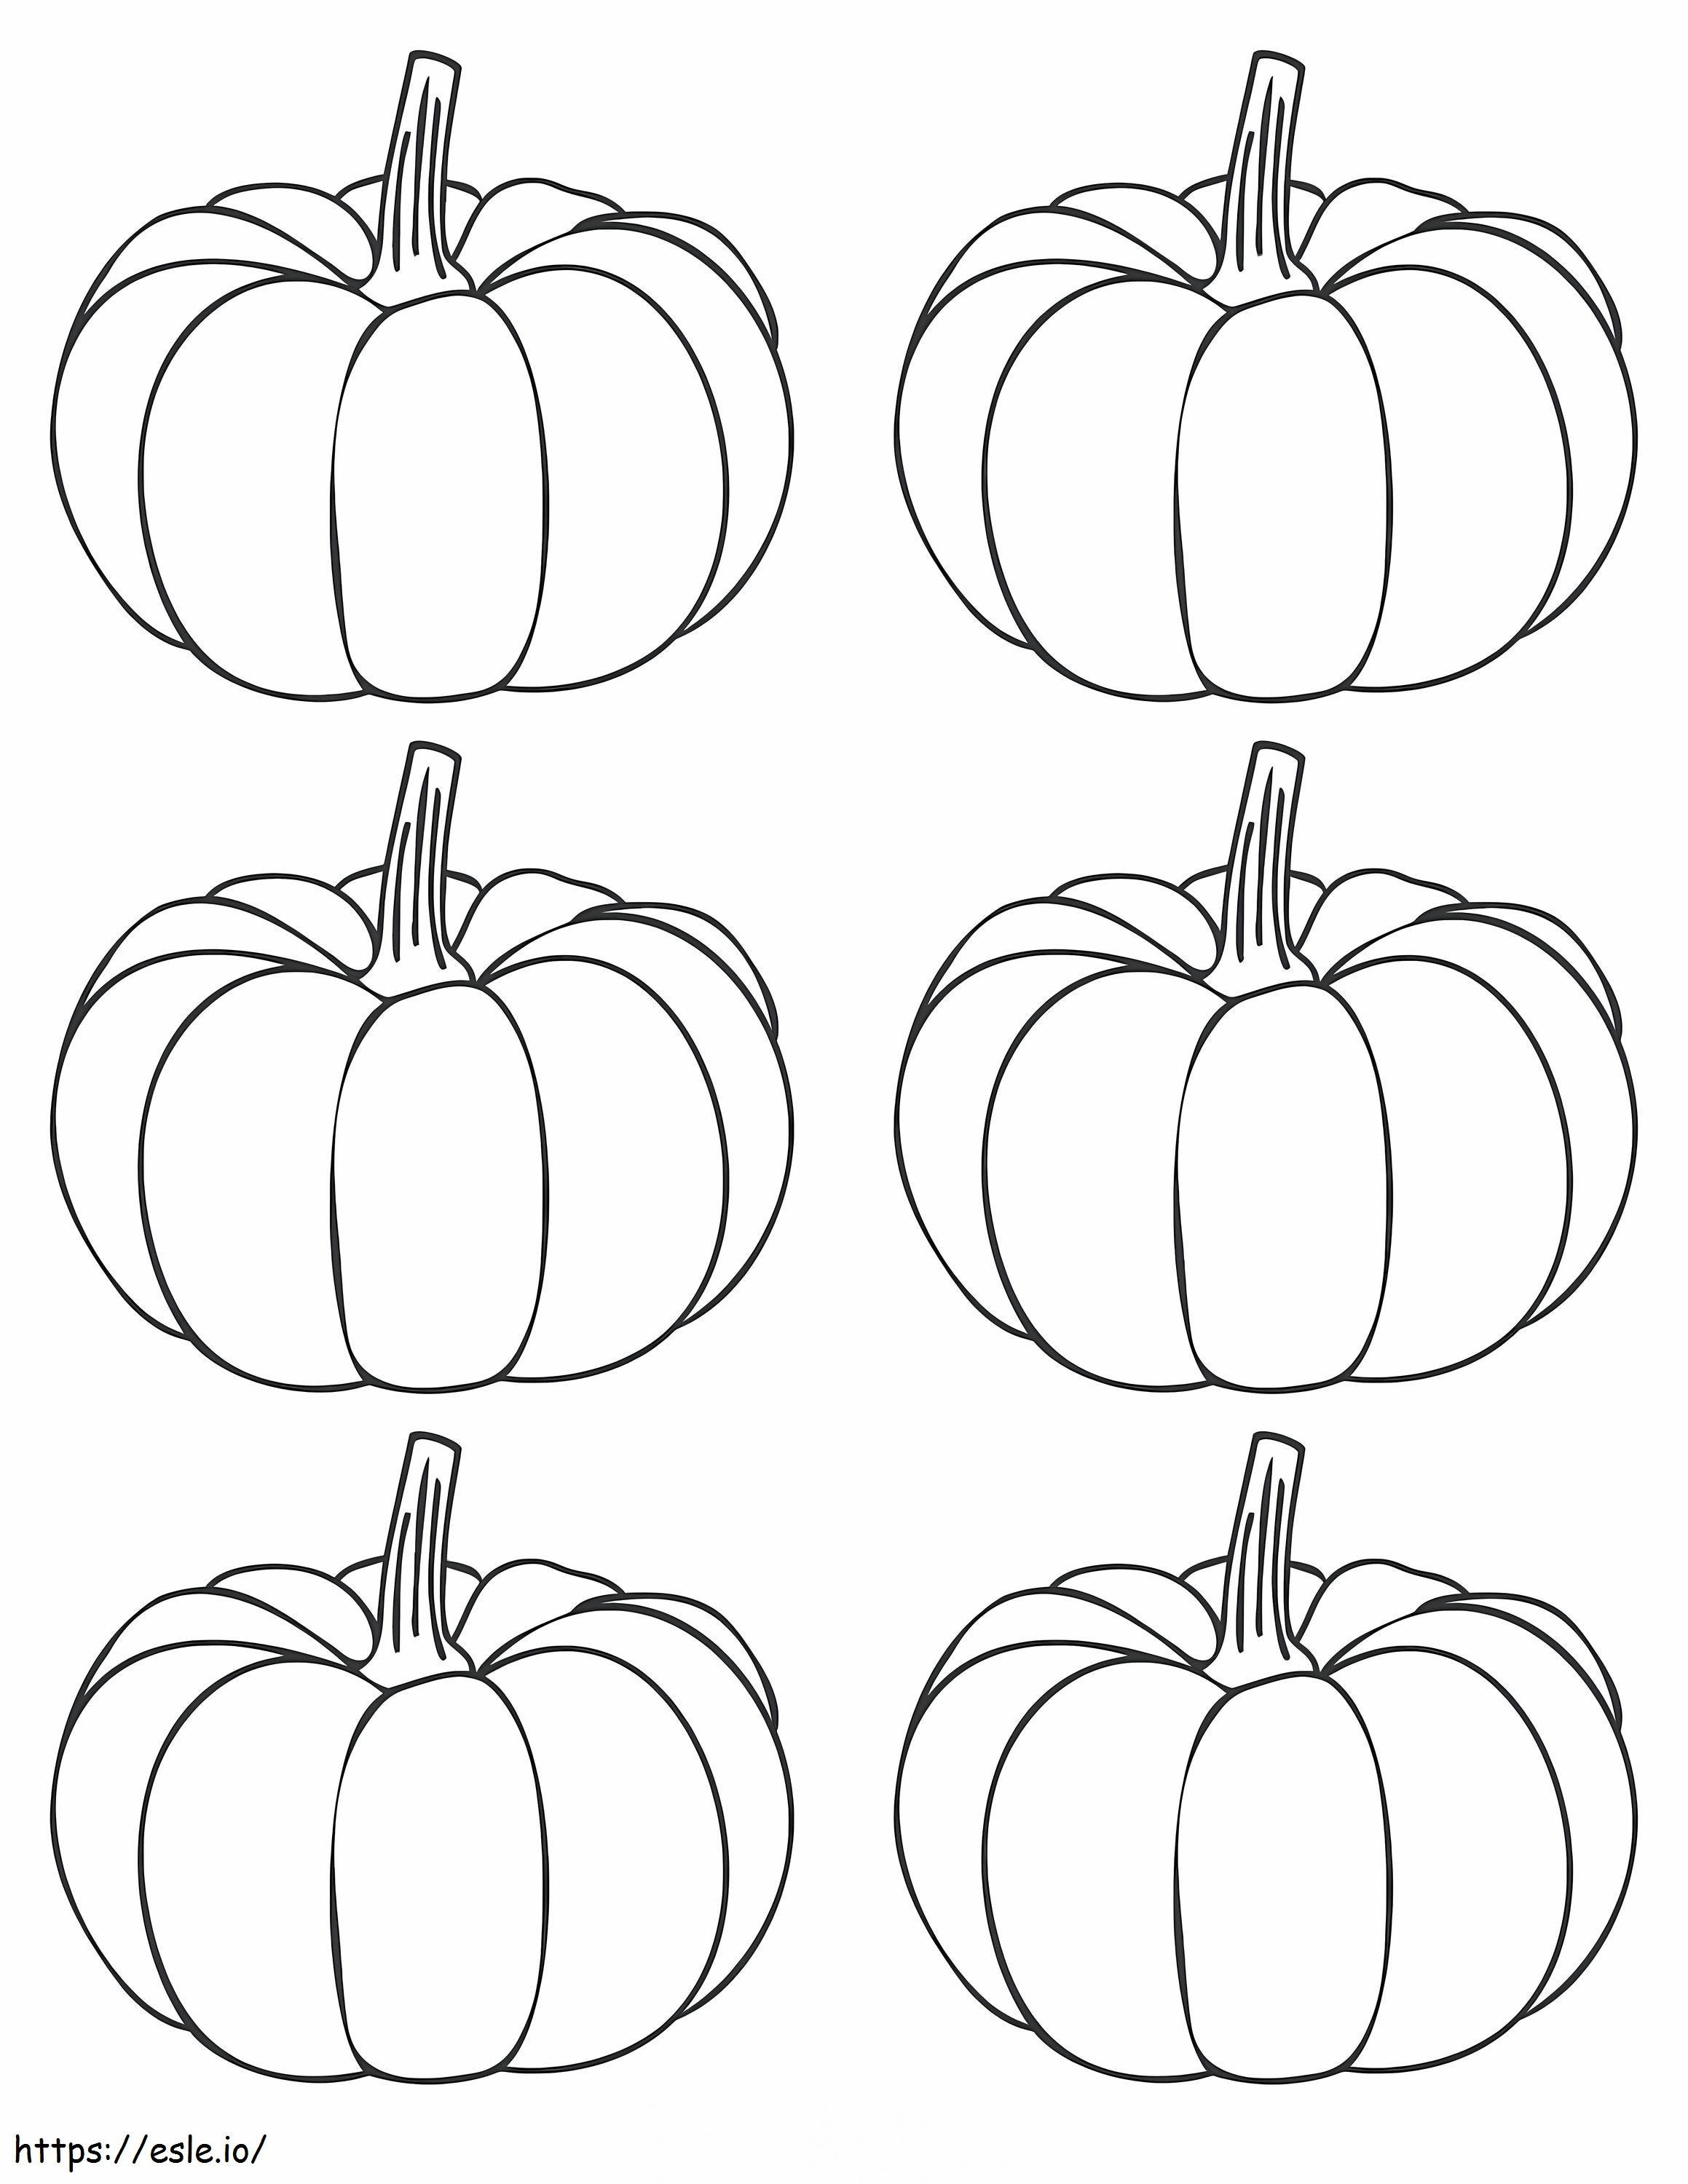 Six Pumpkins coloring page